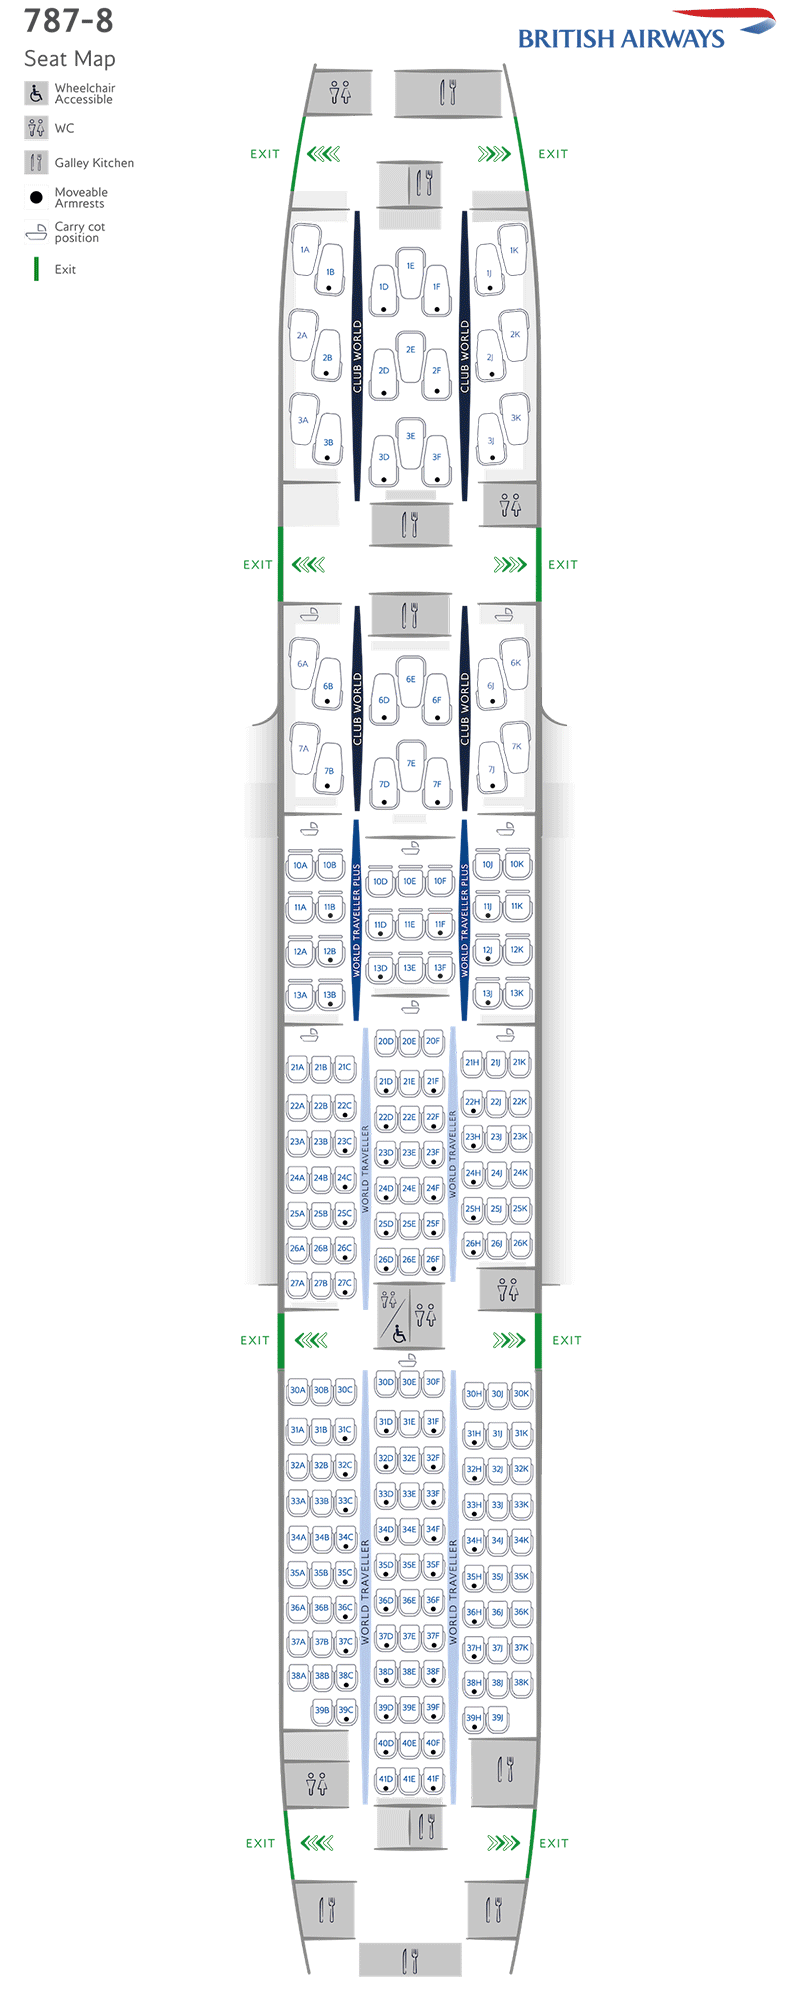 Plan de cabine du Boeing 787-8